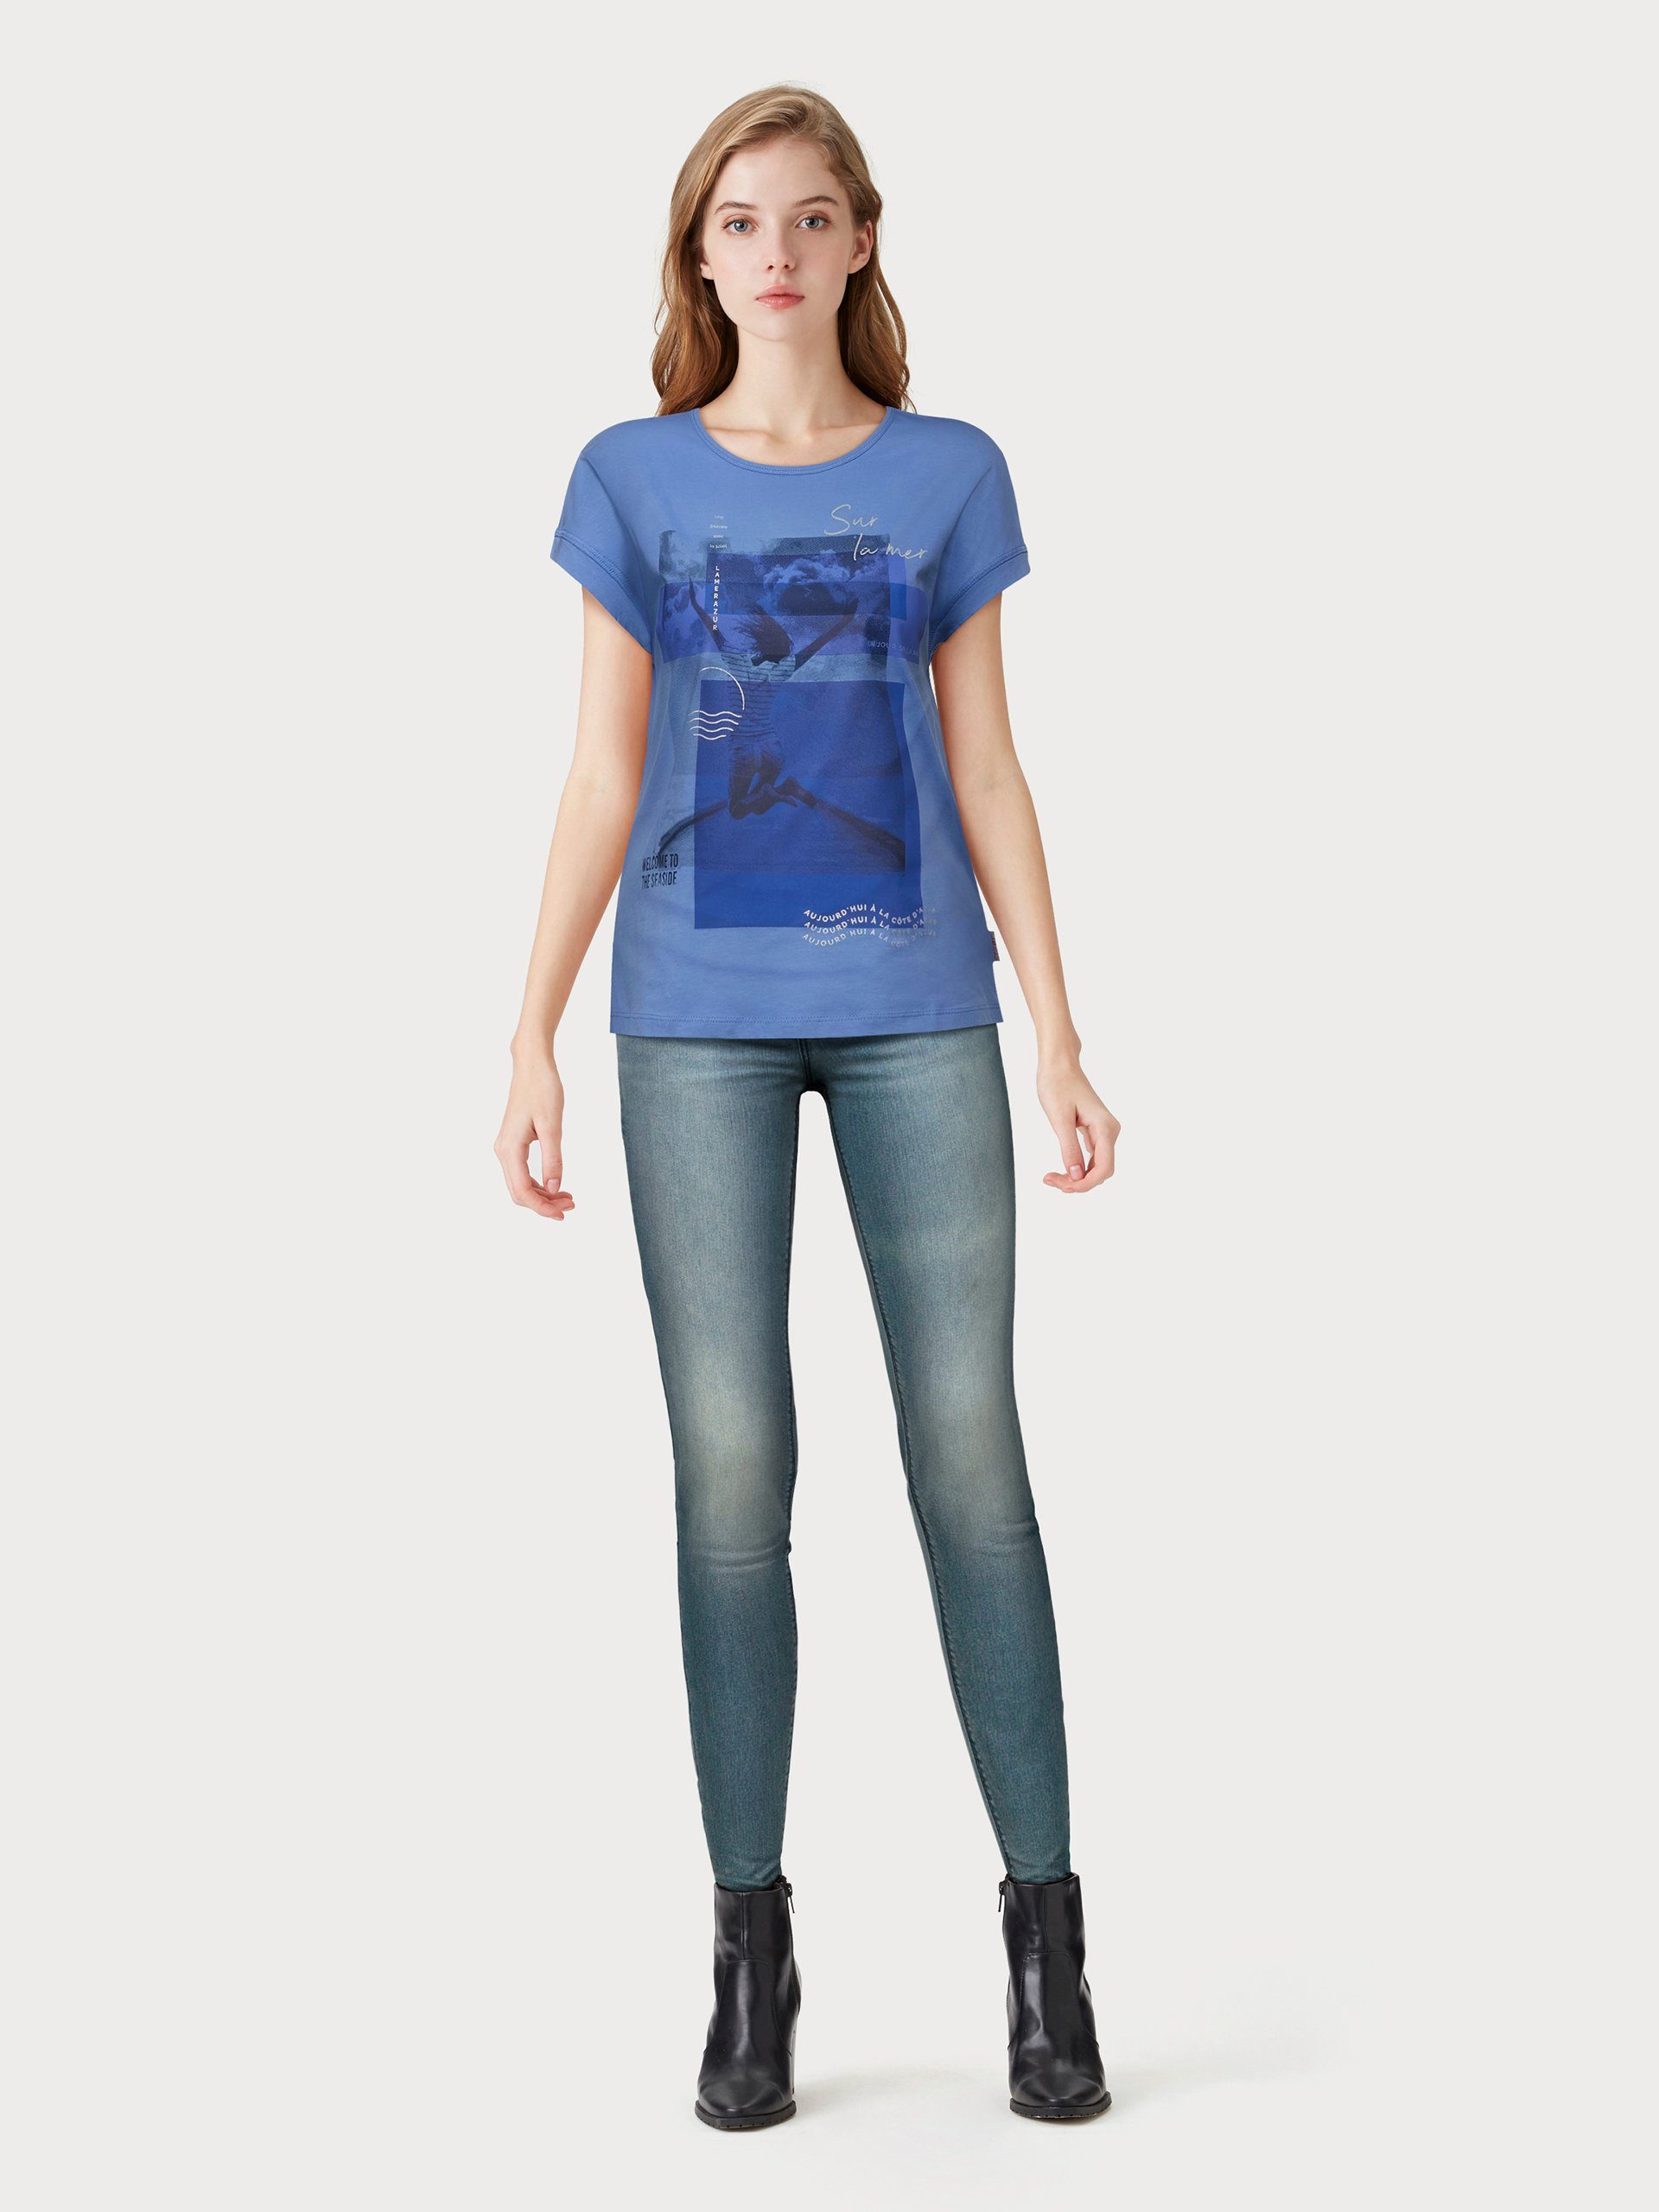 Arizona Skinny-fit-Jeans Mid blue-used Waist Shaping